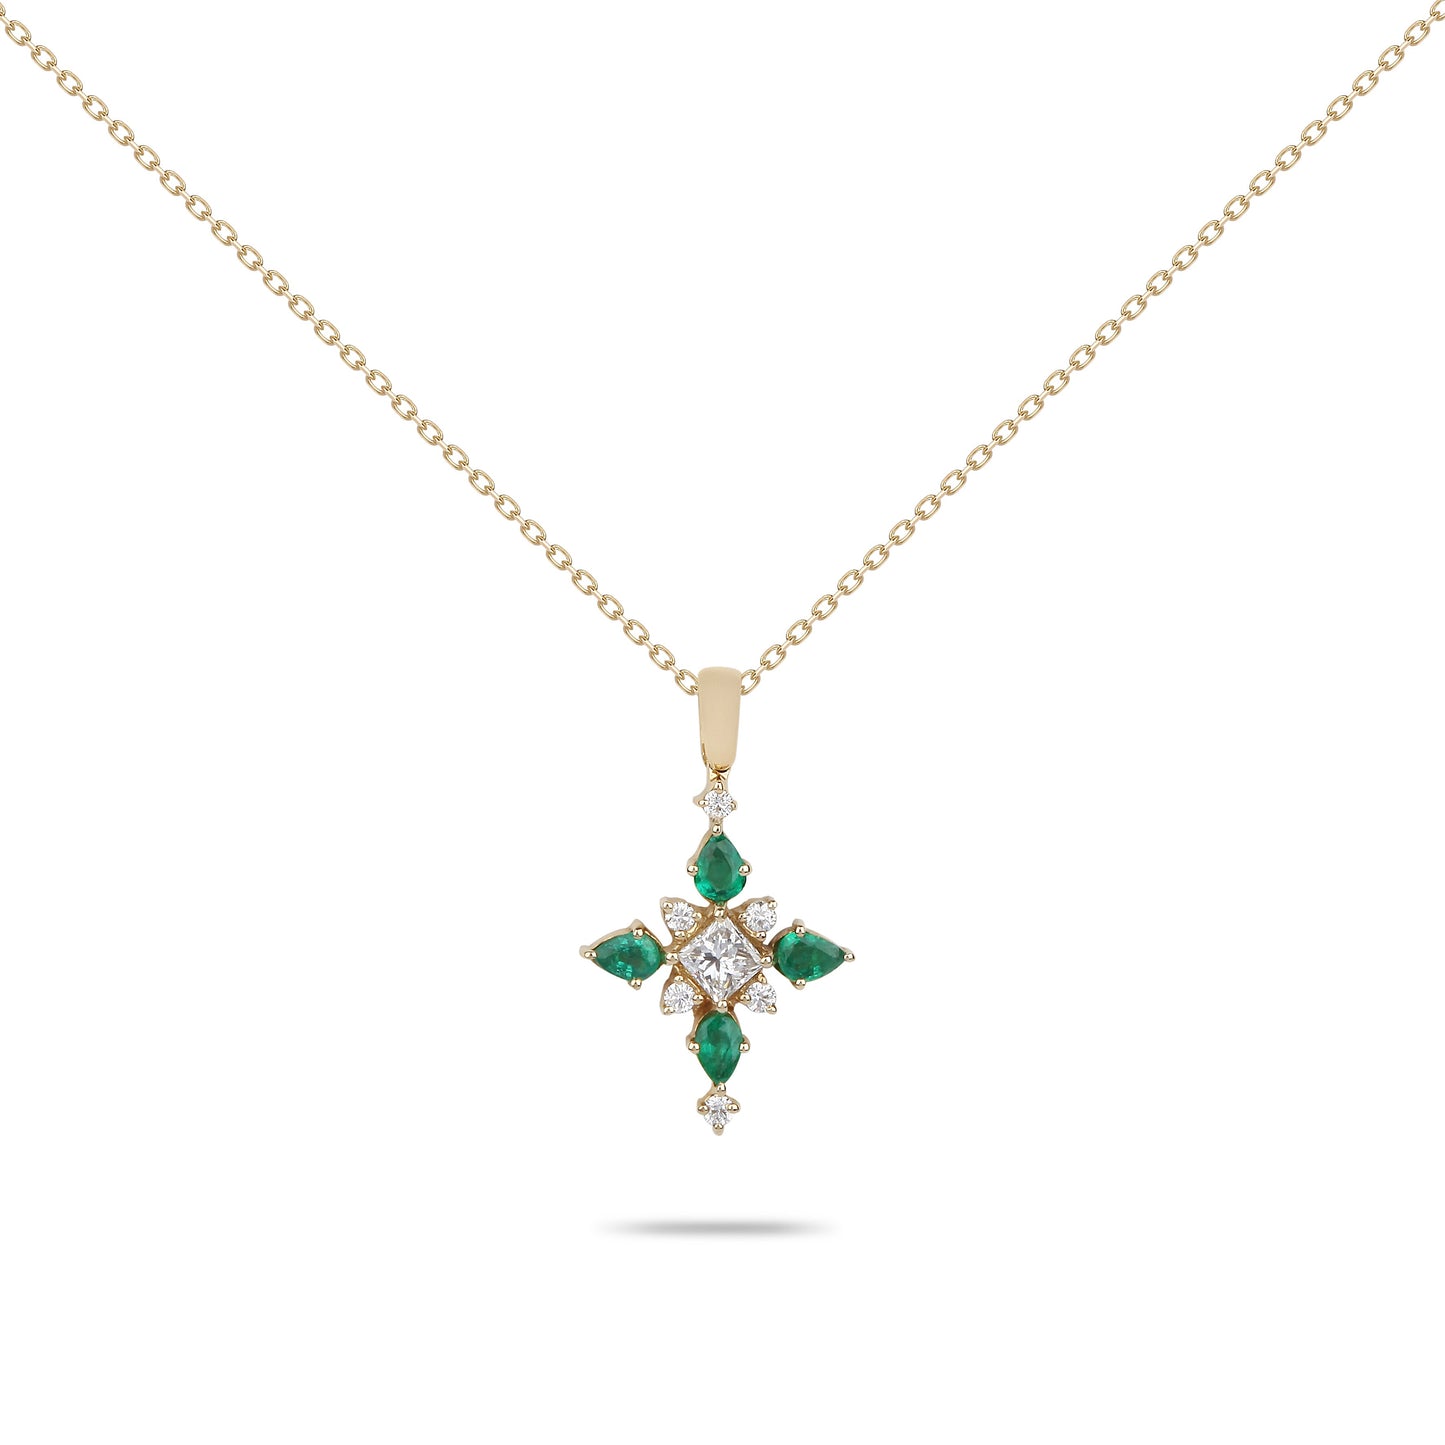 Crossed Emeralds & Diamonds Necklace | Necklaces with diamonds | Buy Jewelry online 